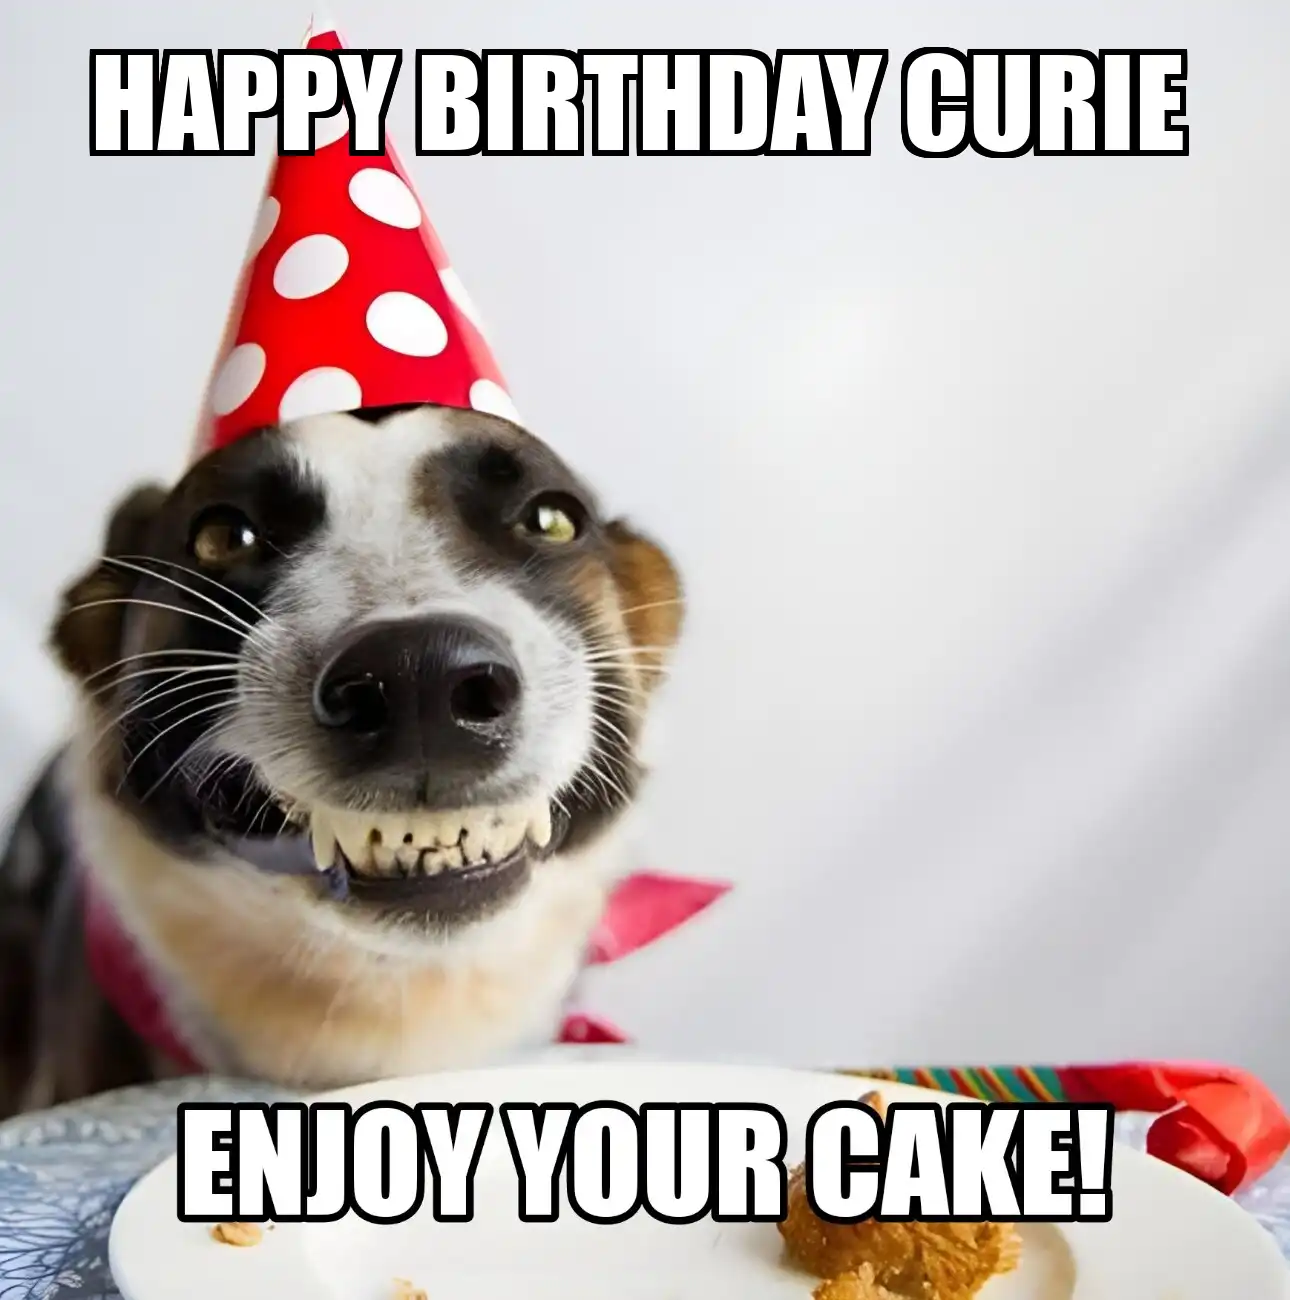 Happy Birthday Curie Enjoy Your Cake Dog Meme